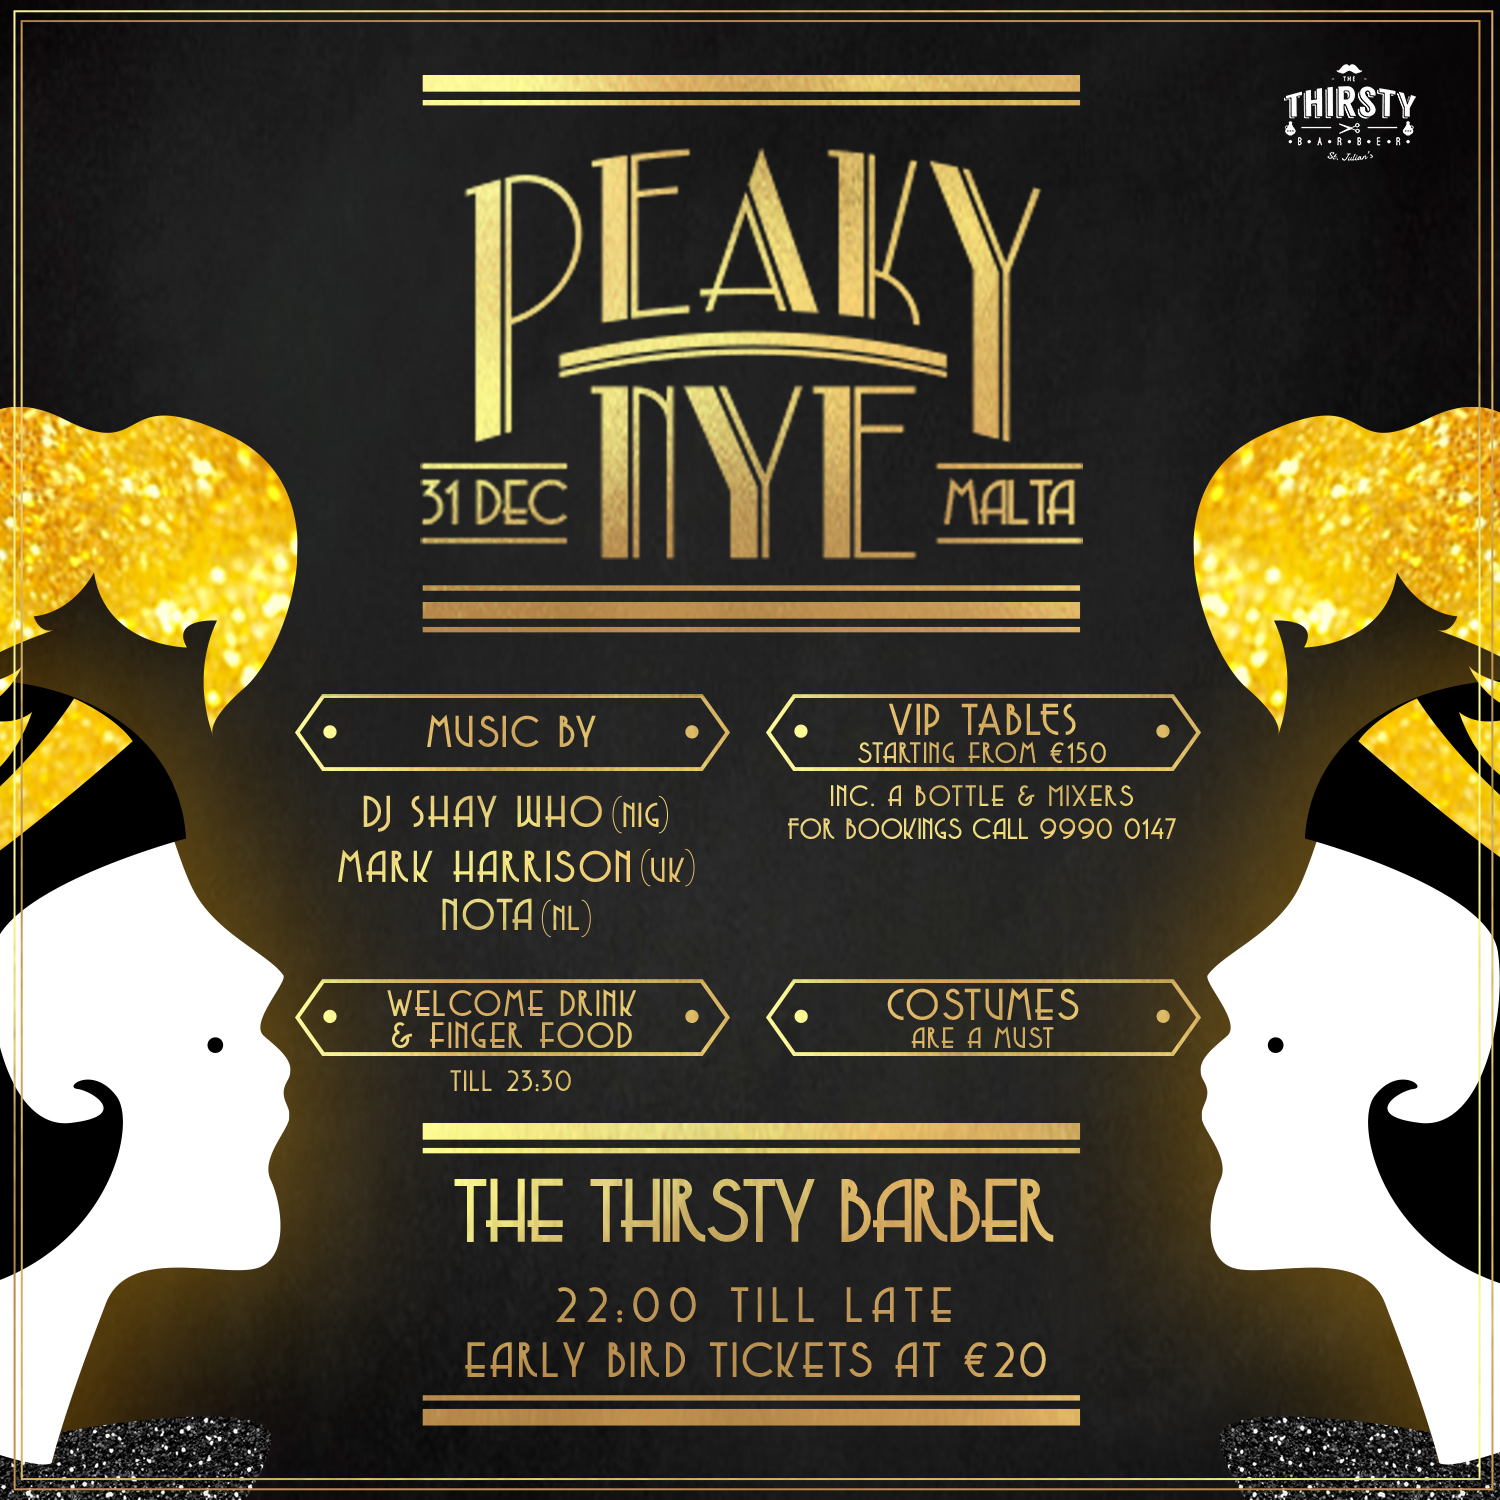 The Peaky NYE poster